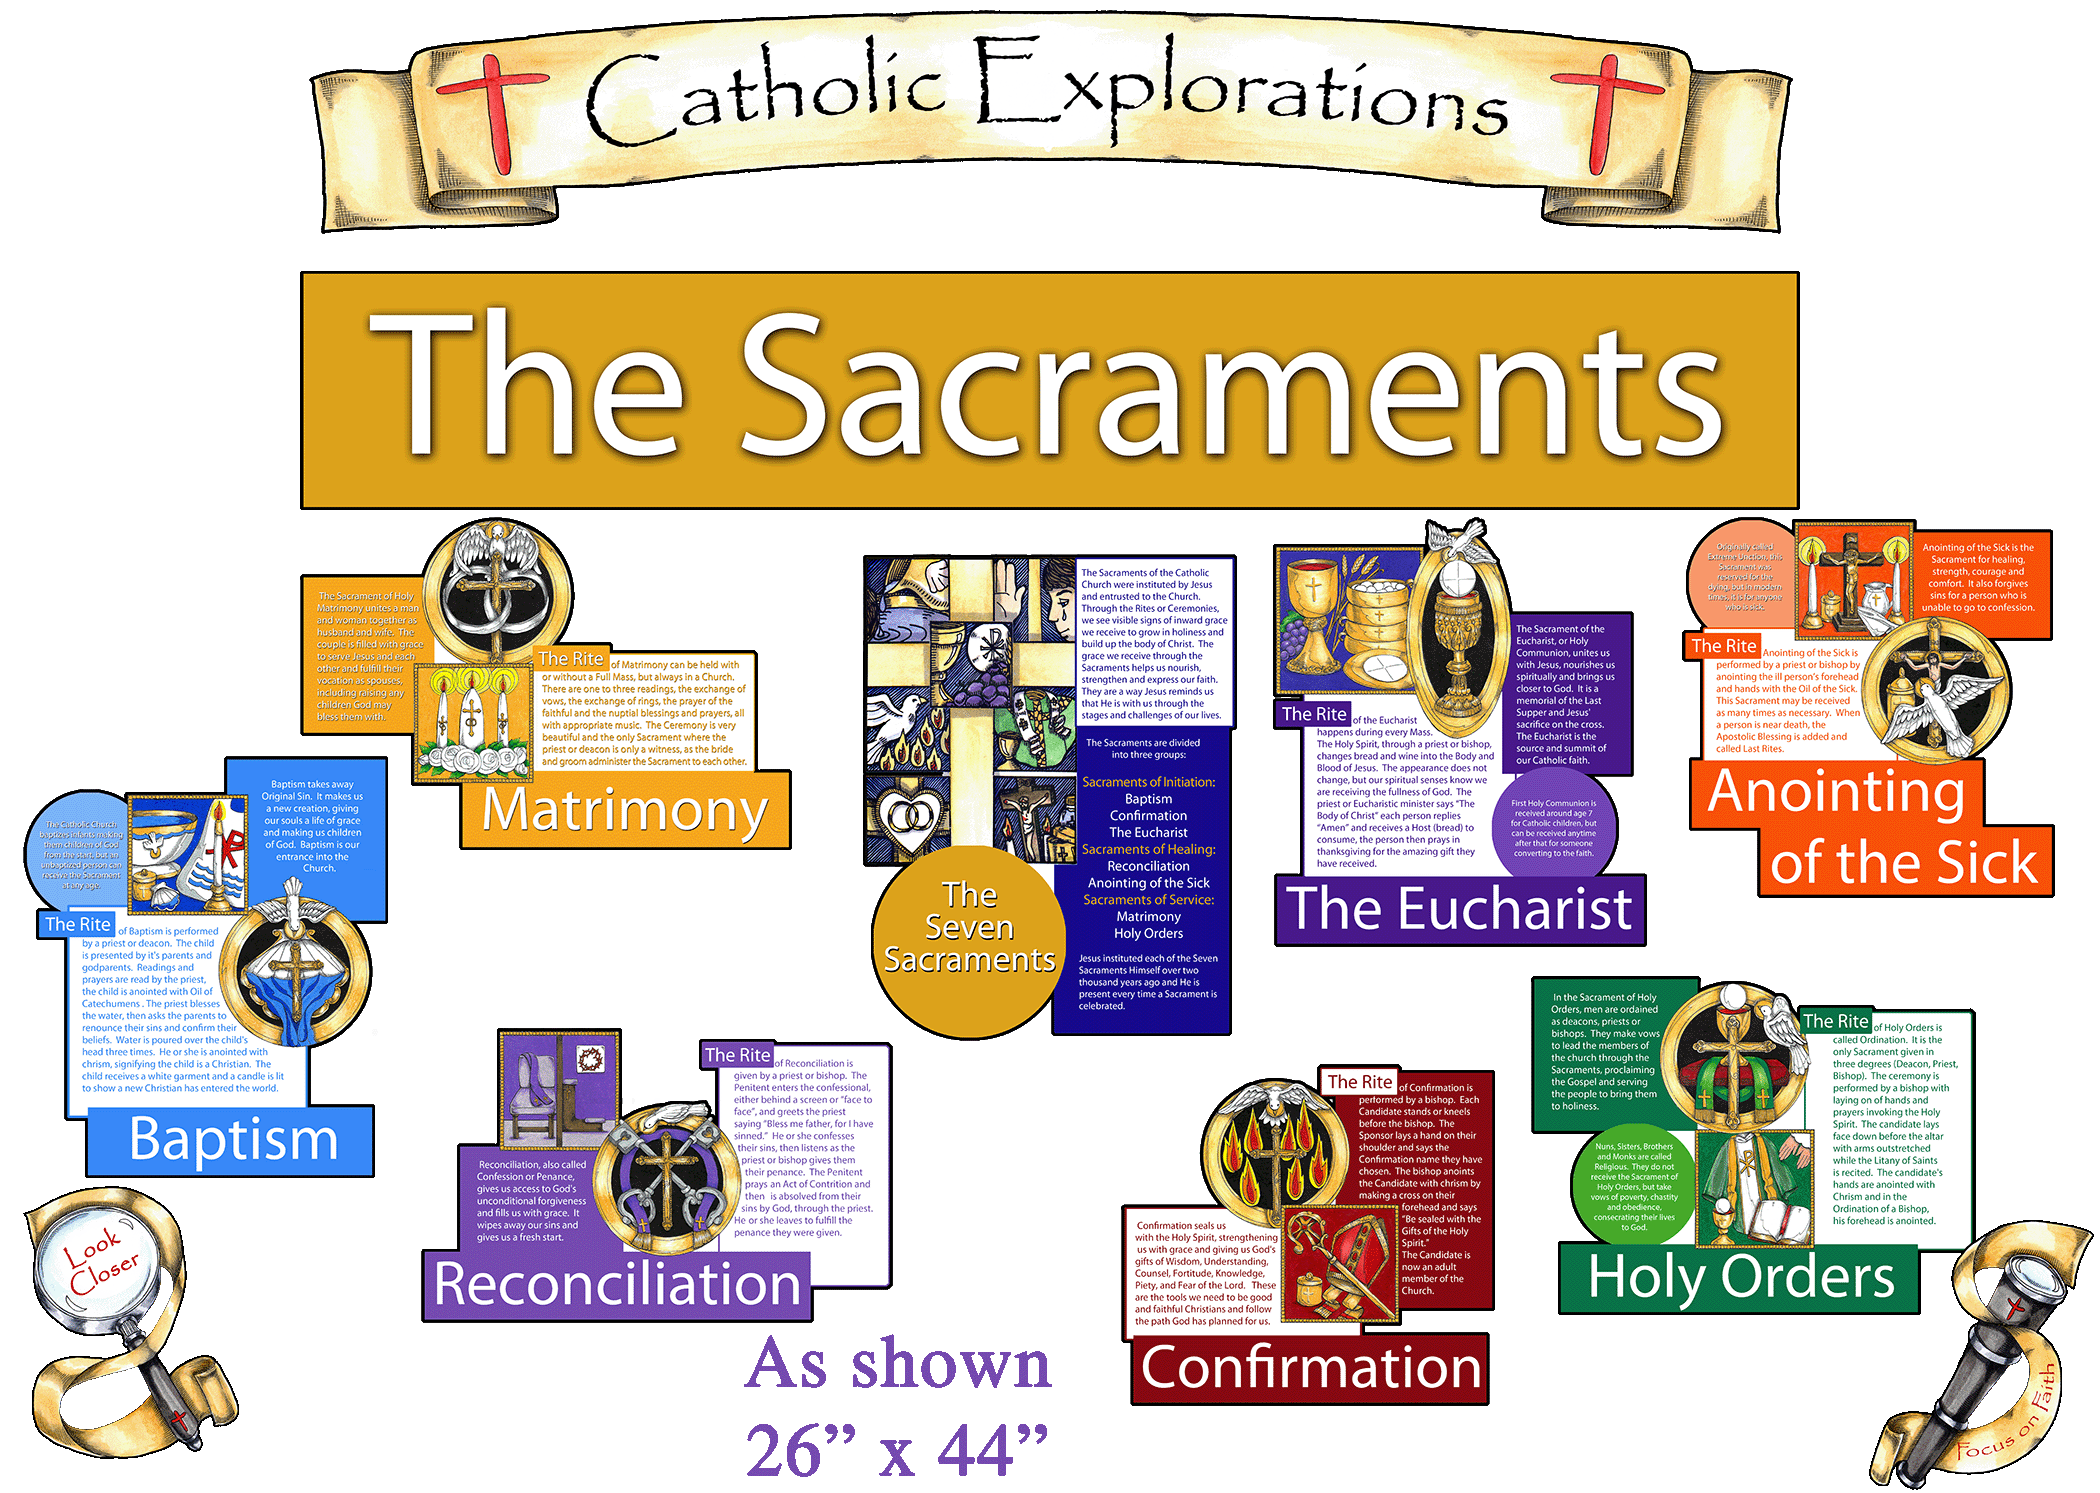 Catholic Explorations The Sacraments